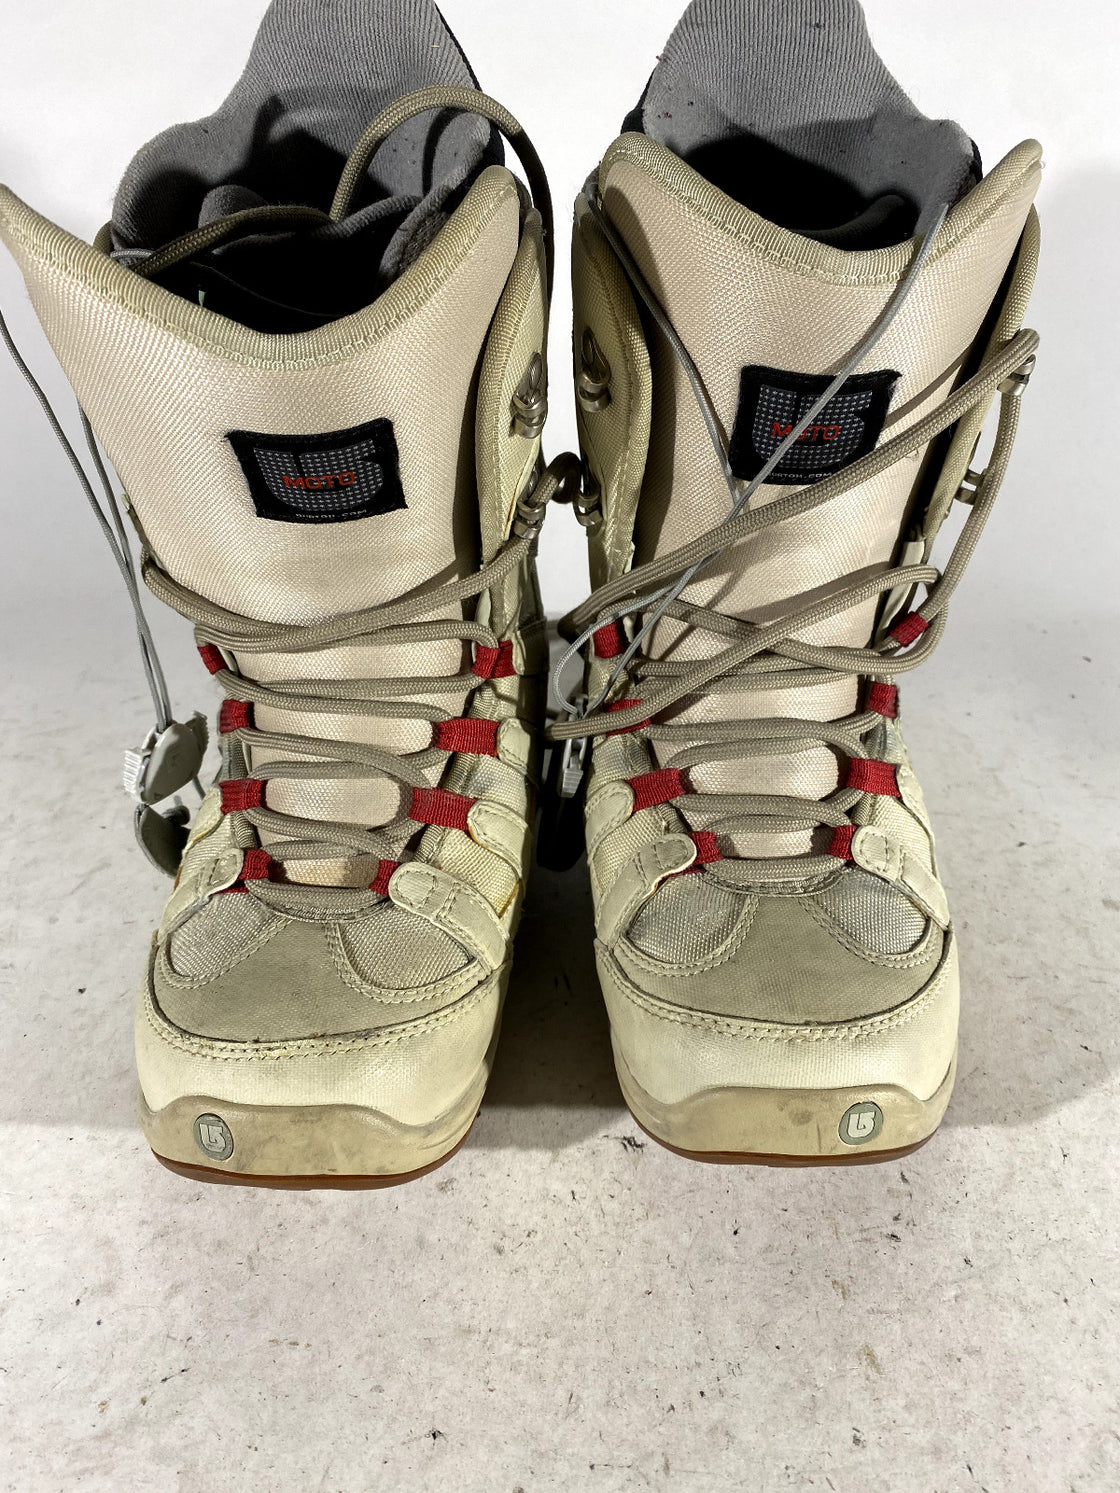 BURTON Moto Snowboard Boots Ladies Size EU36.5 US6 UK4, Mondo 240 mm